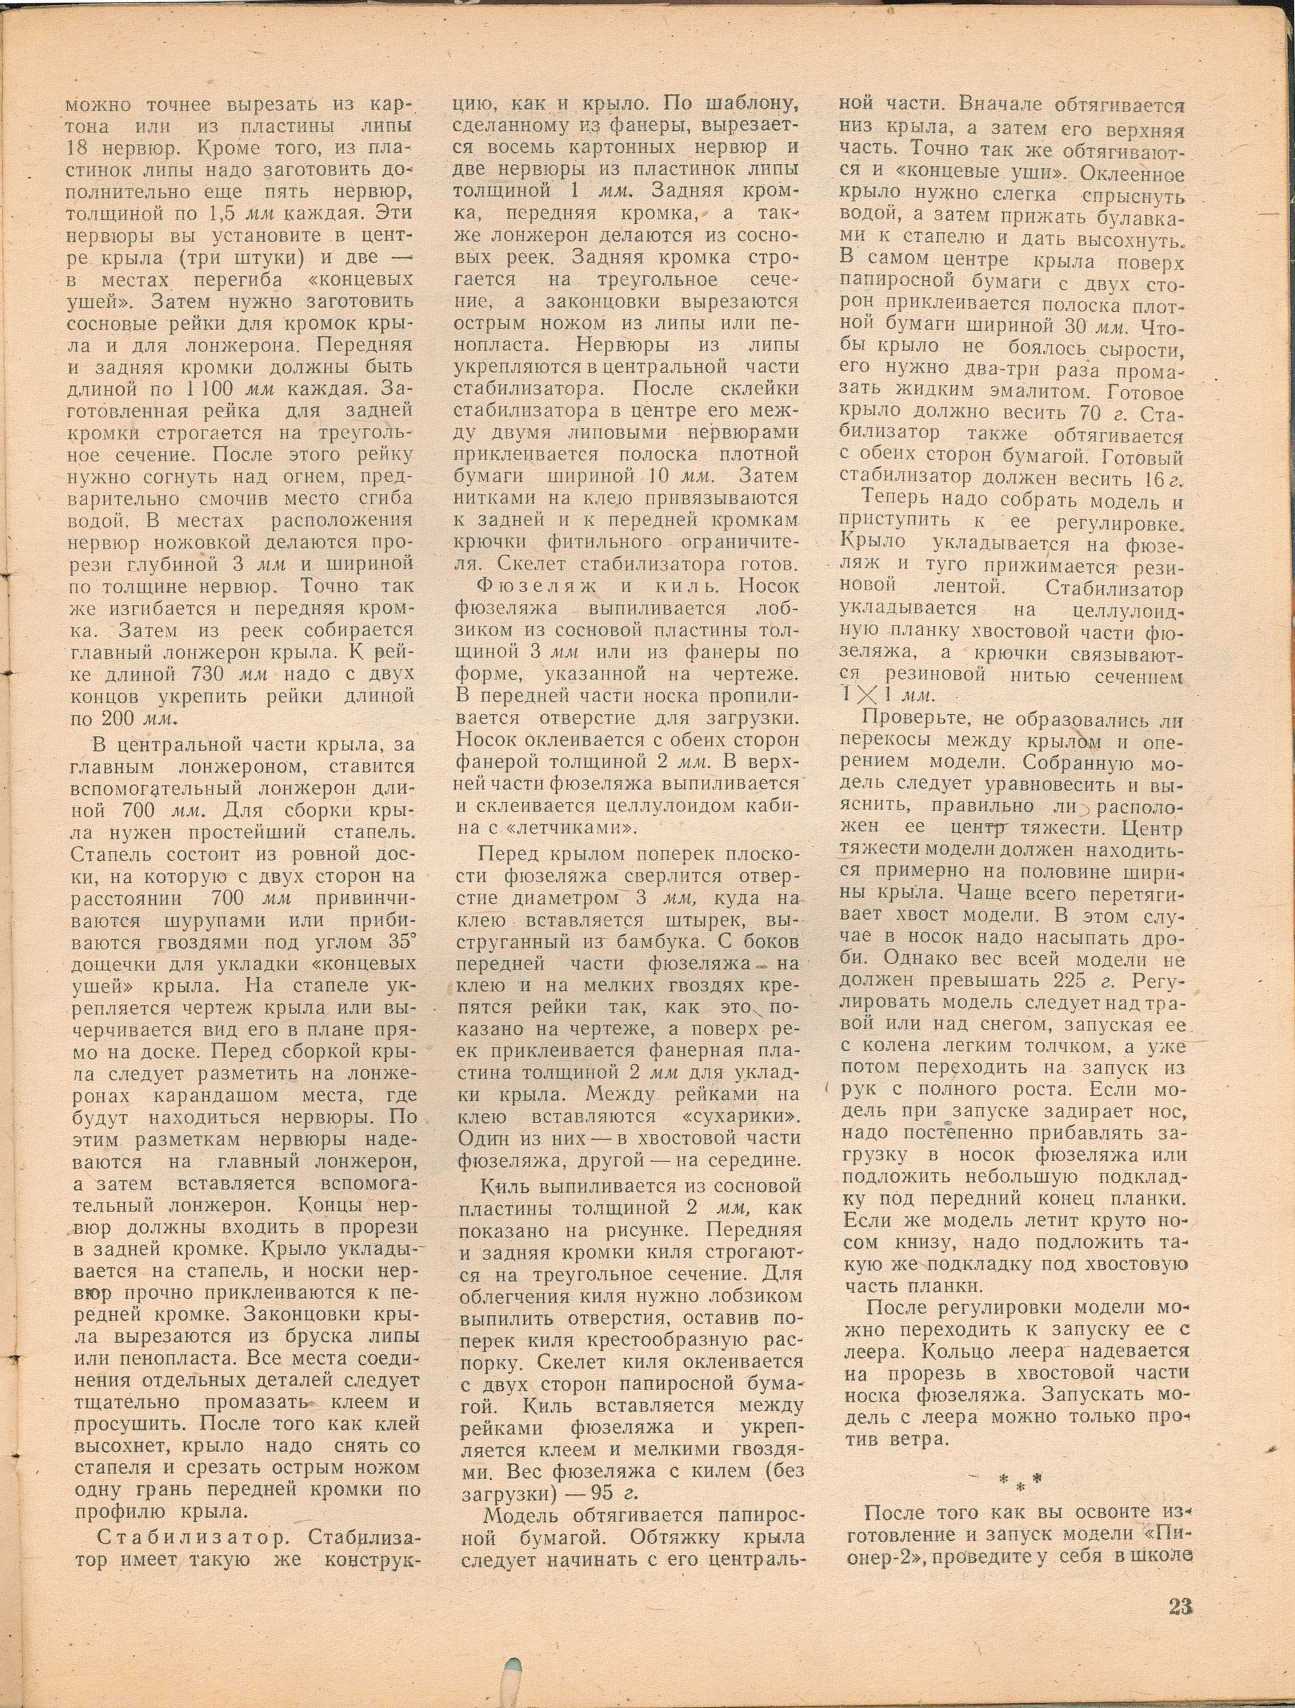 ЮМК 6, 1963, 23 c.